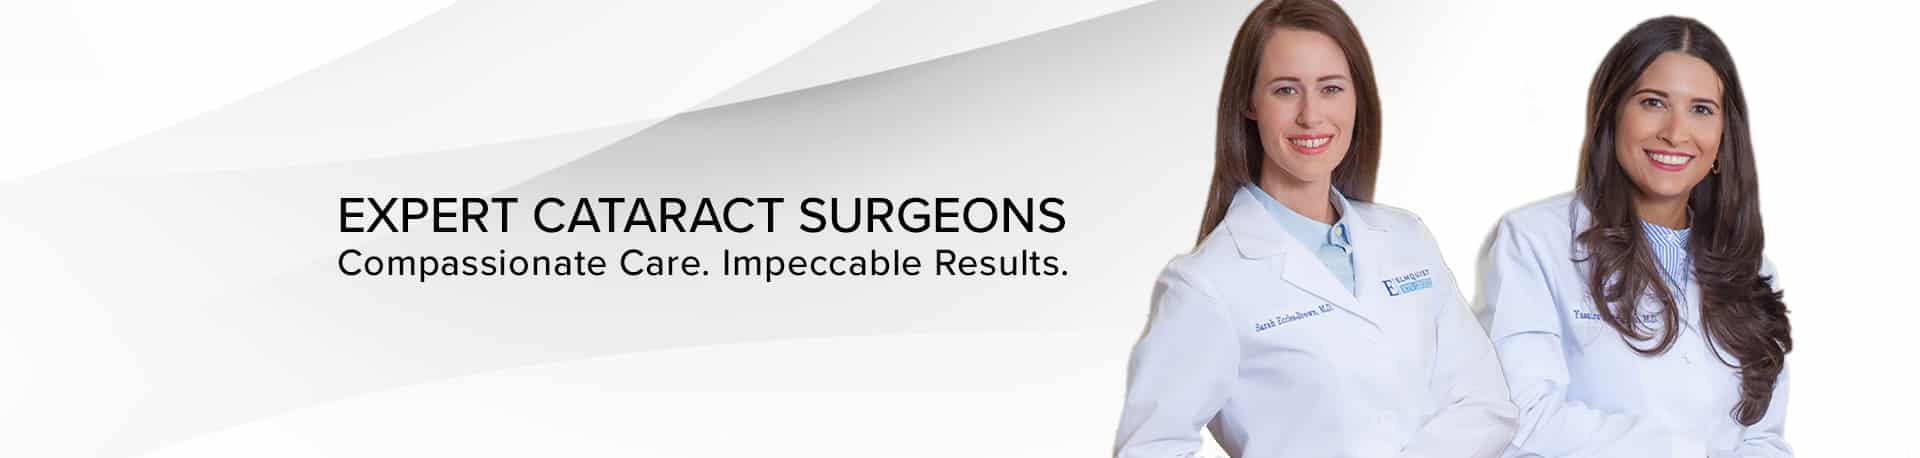 Expert Cataract Surgeons at Elmquist Eye Group